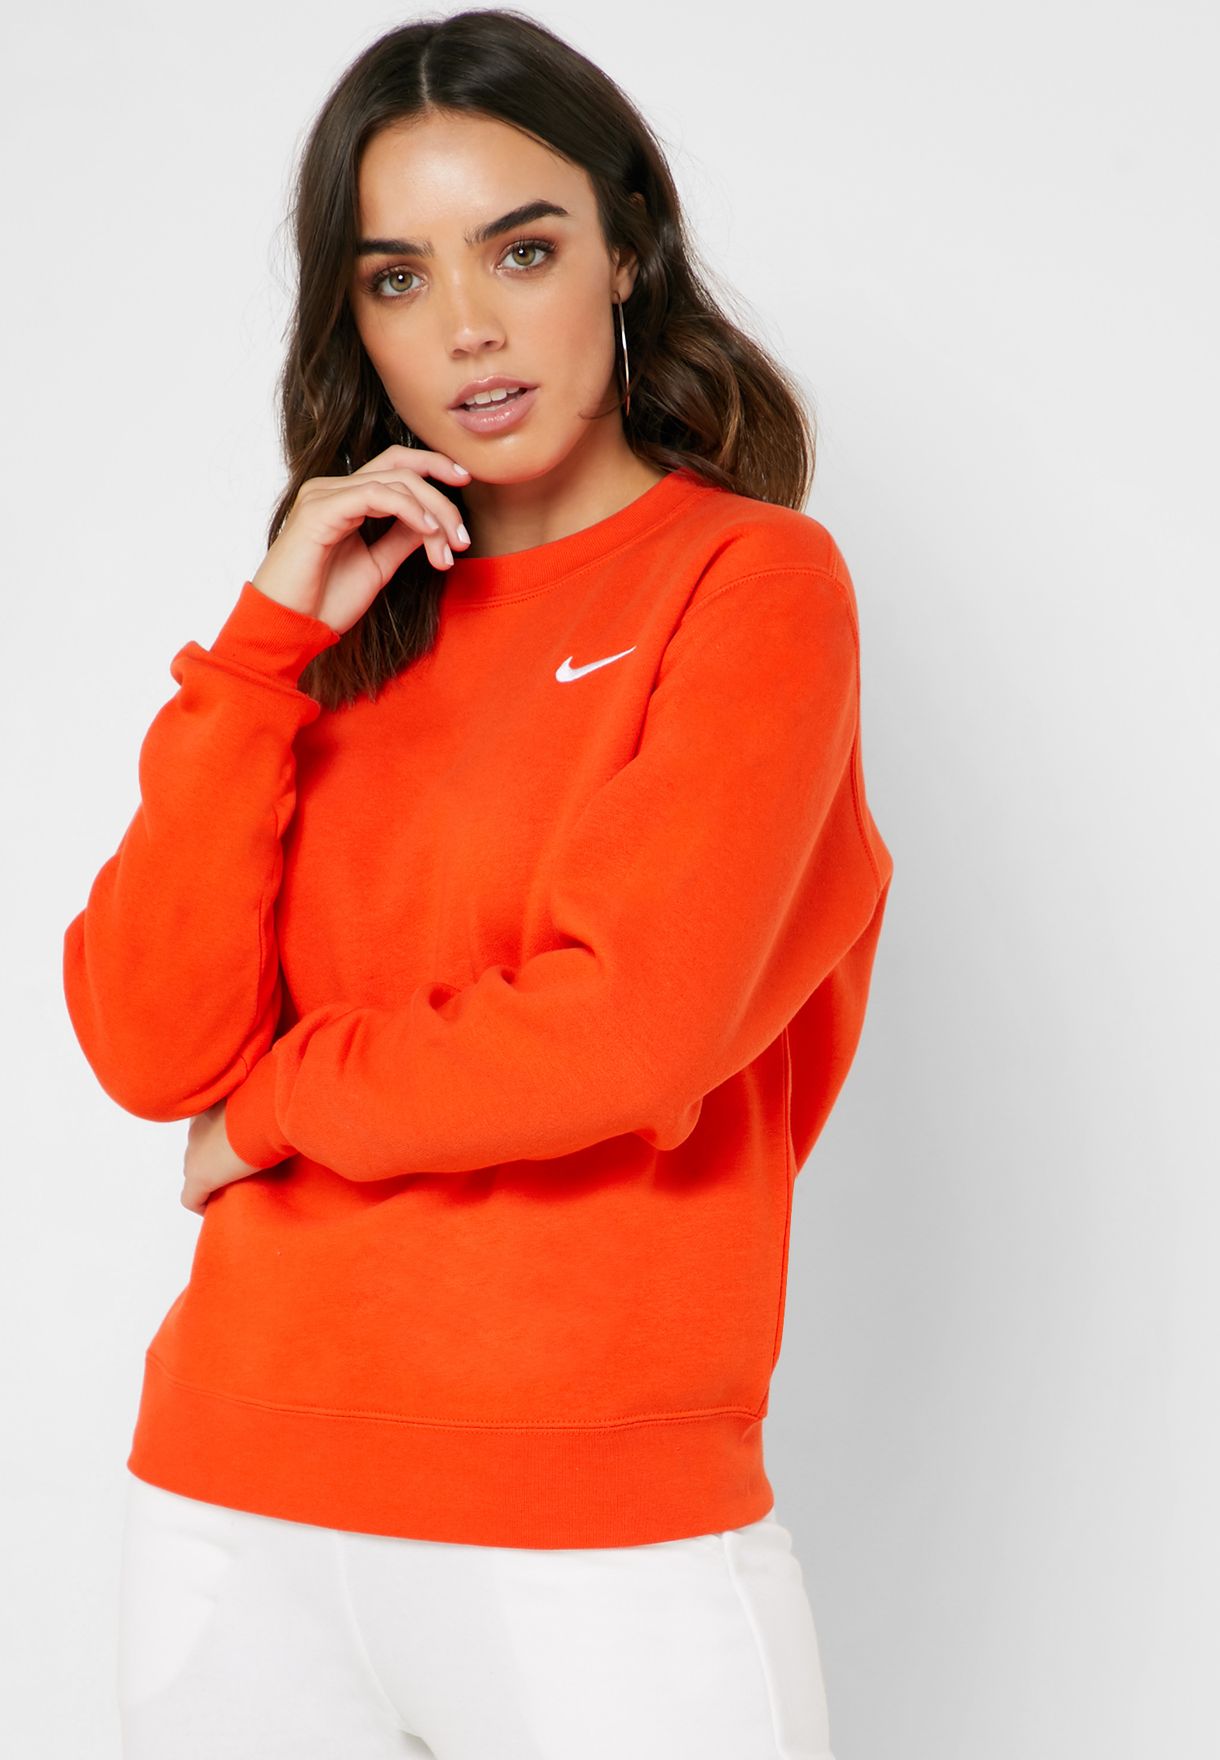 nike orange sweatshirt womens 